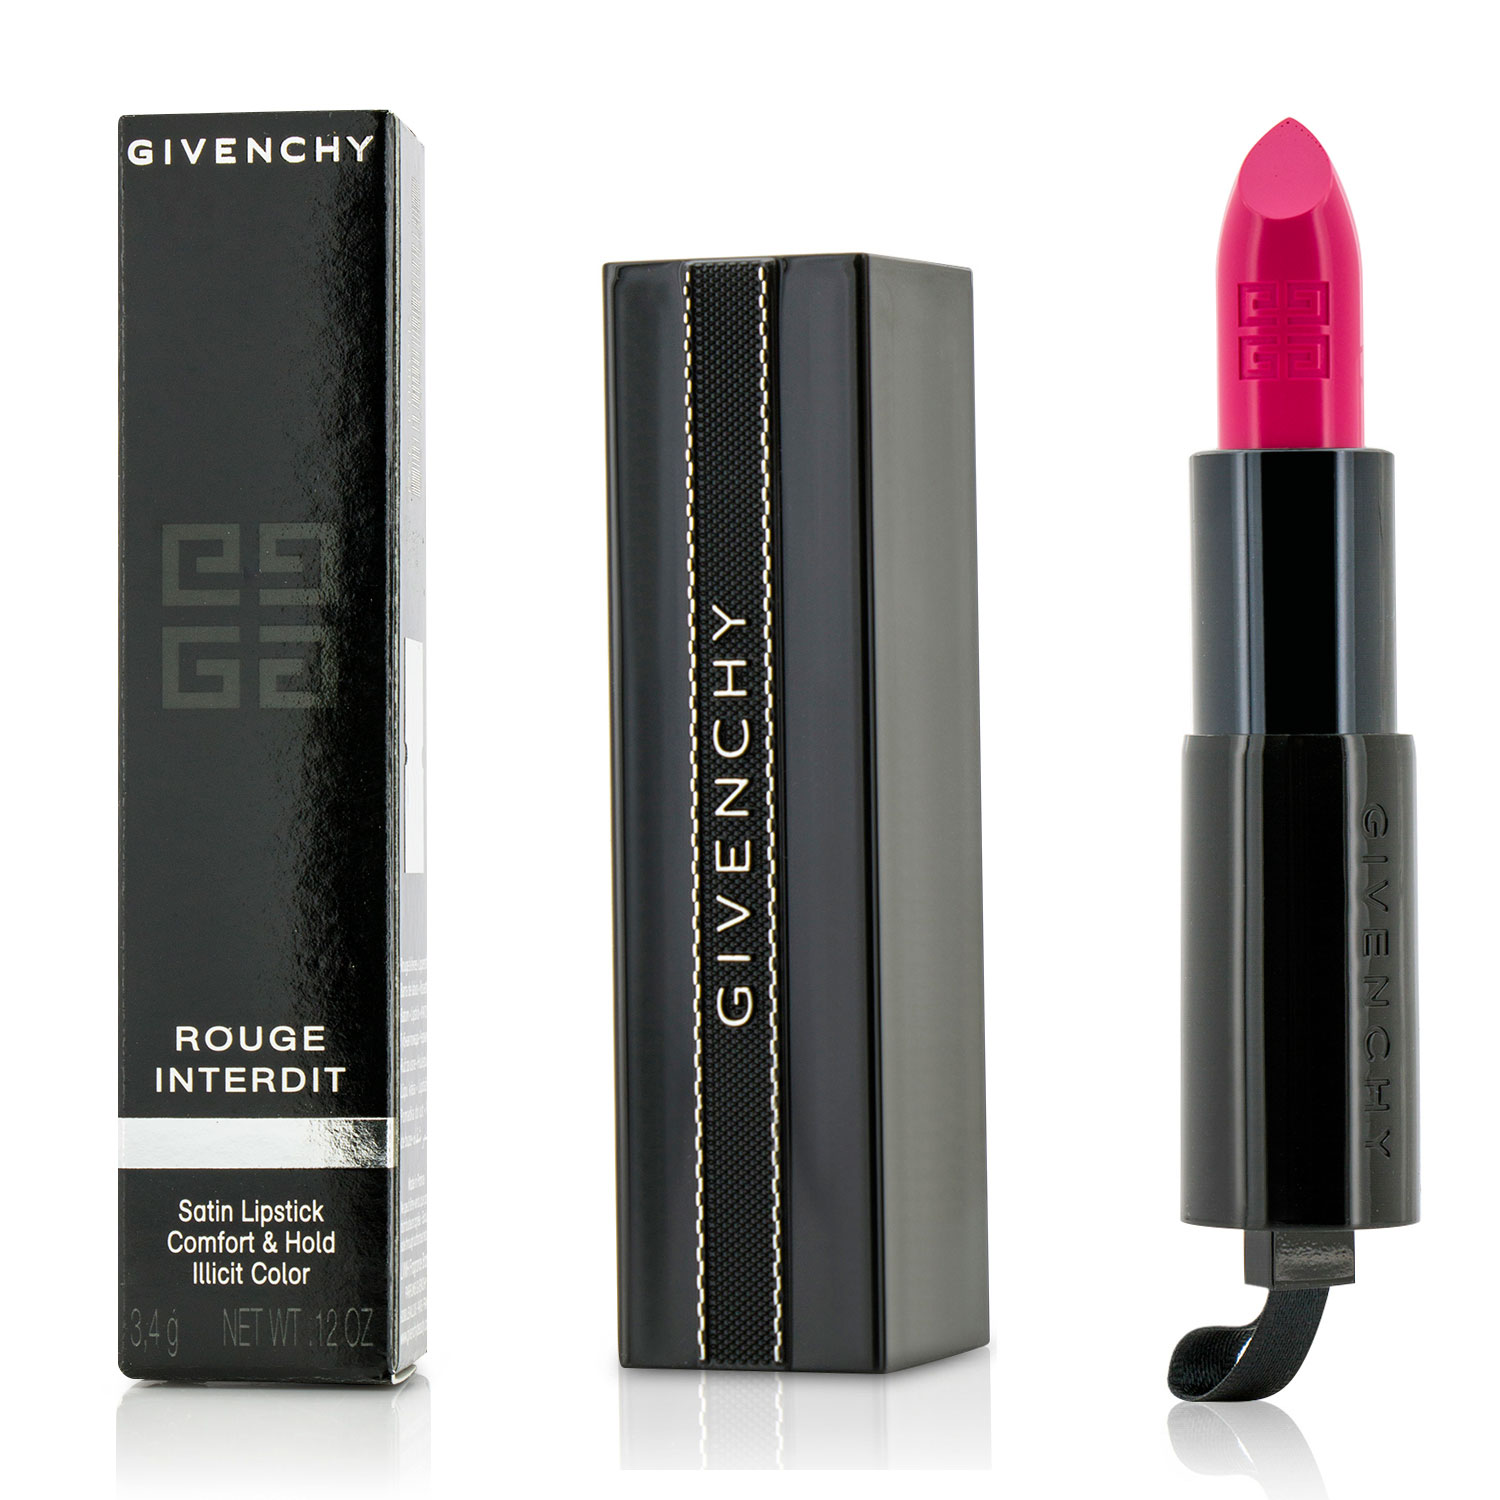 Rouge Interdit Satin Lipstick - # 22 Infrarose Givenchy Image